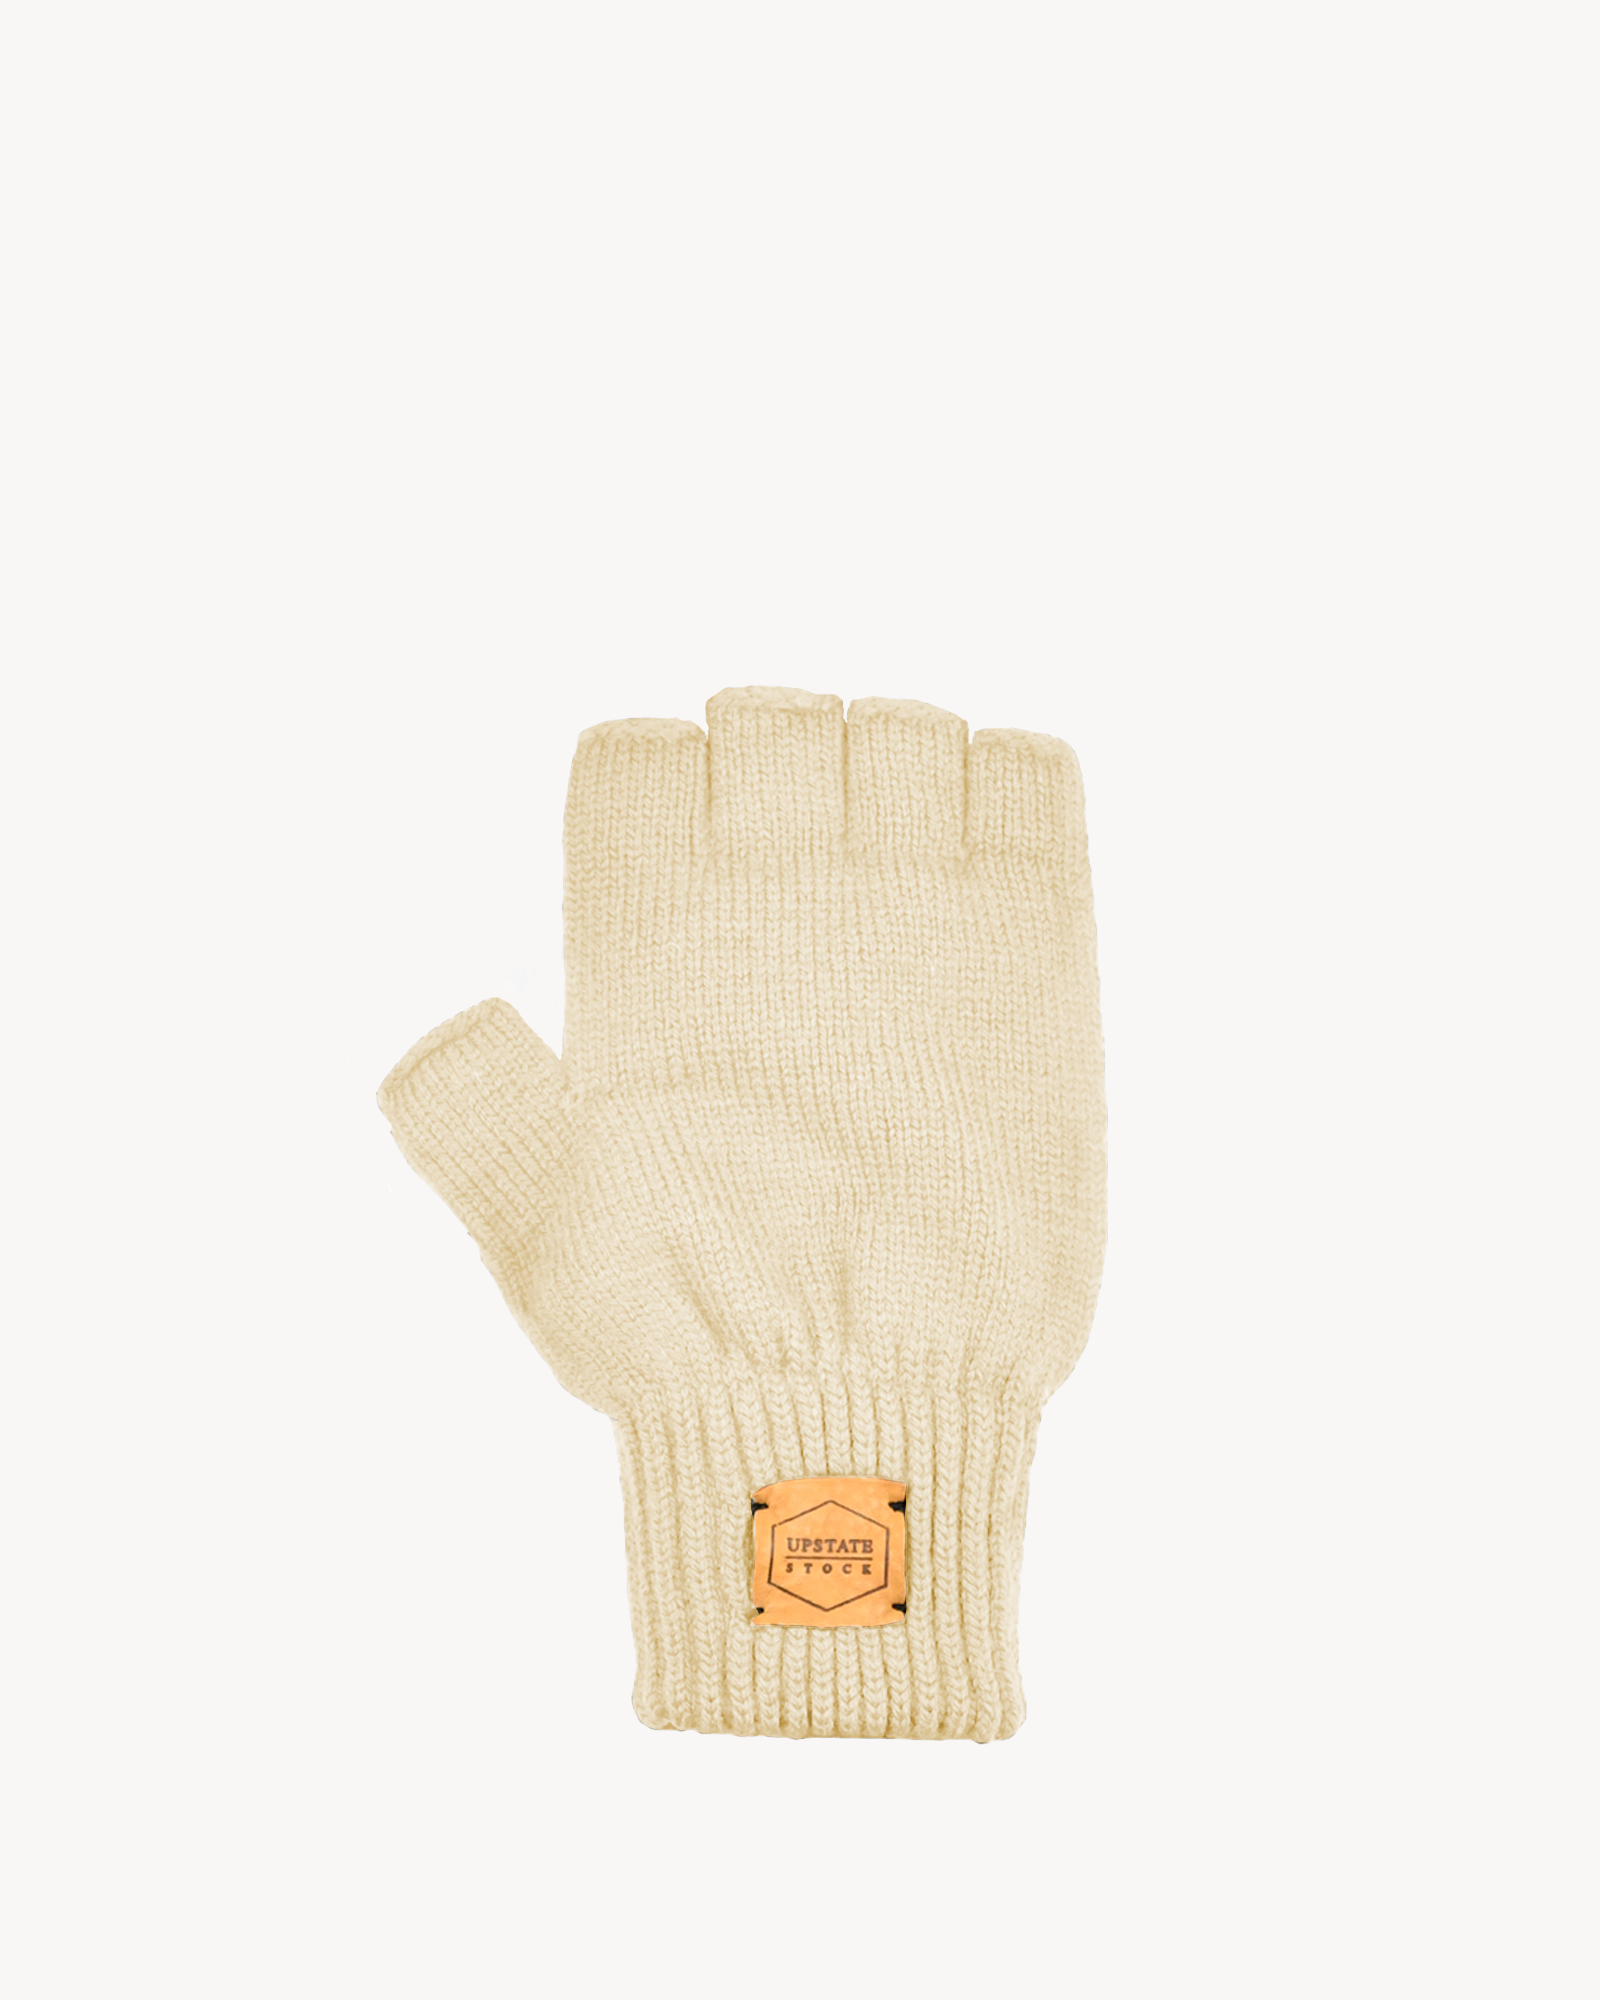 Merino Wool Fingerless Gloves, Undyed  Bucko! in Peekskill, NY - Clothing,  Home Goods, Gifts.